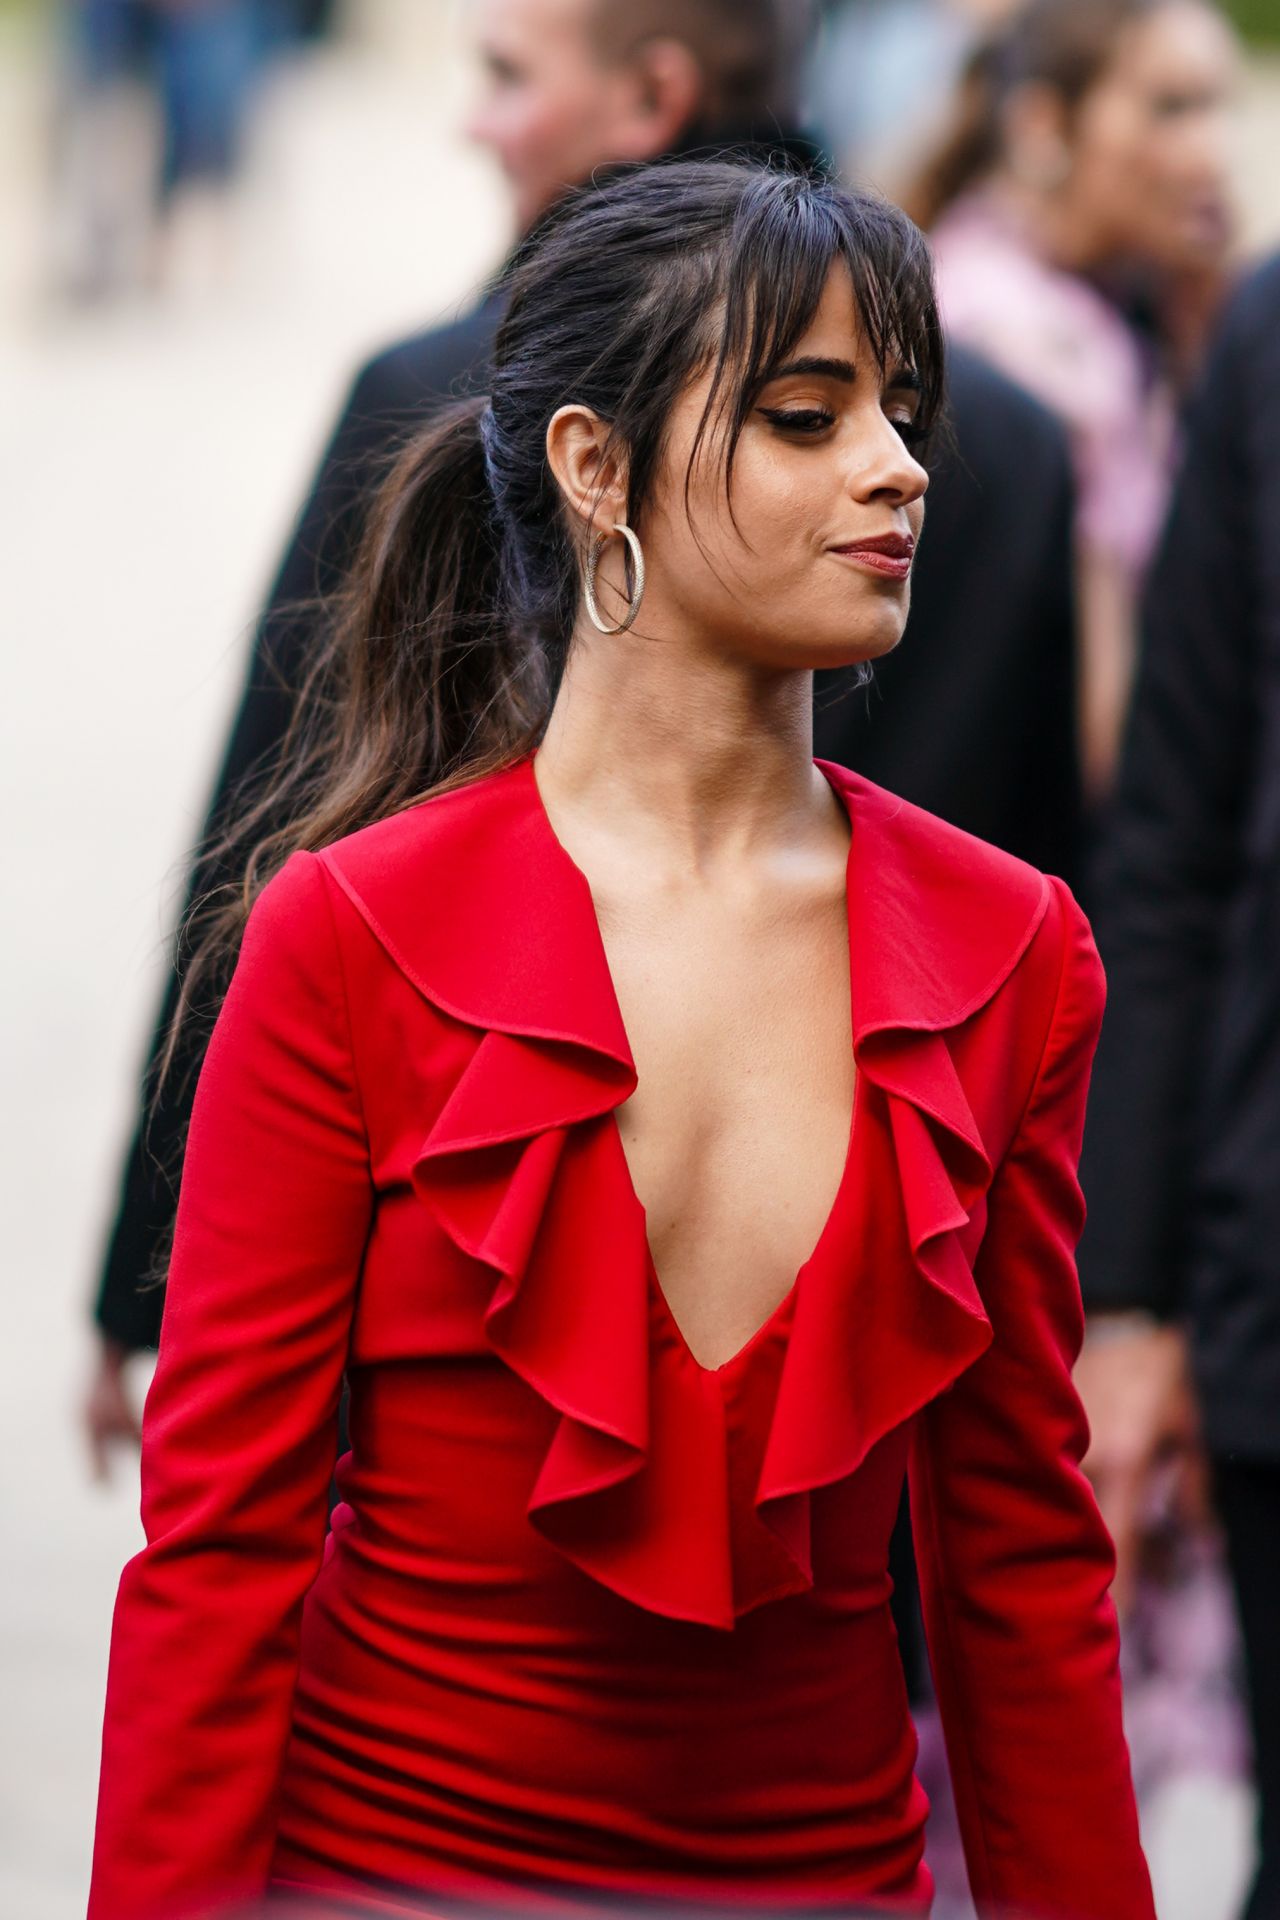 Camila Cabello in a Daring Red Dress 09/29/2019.